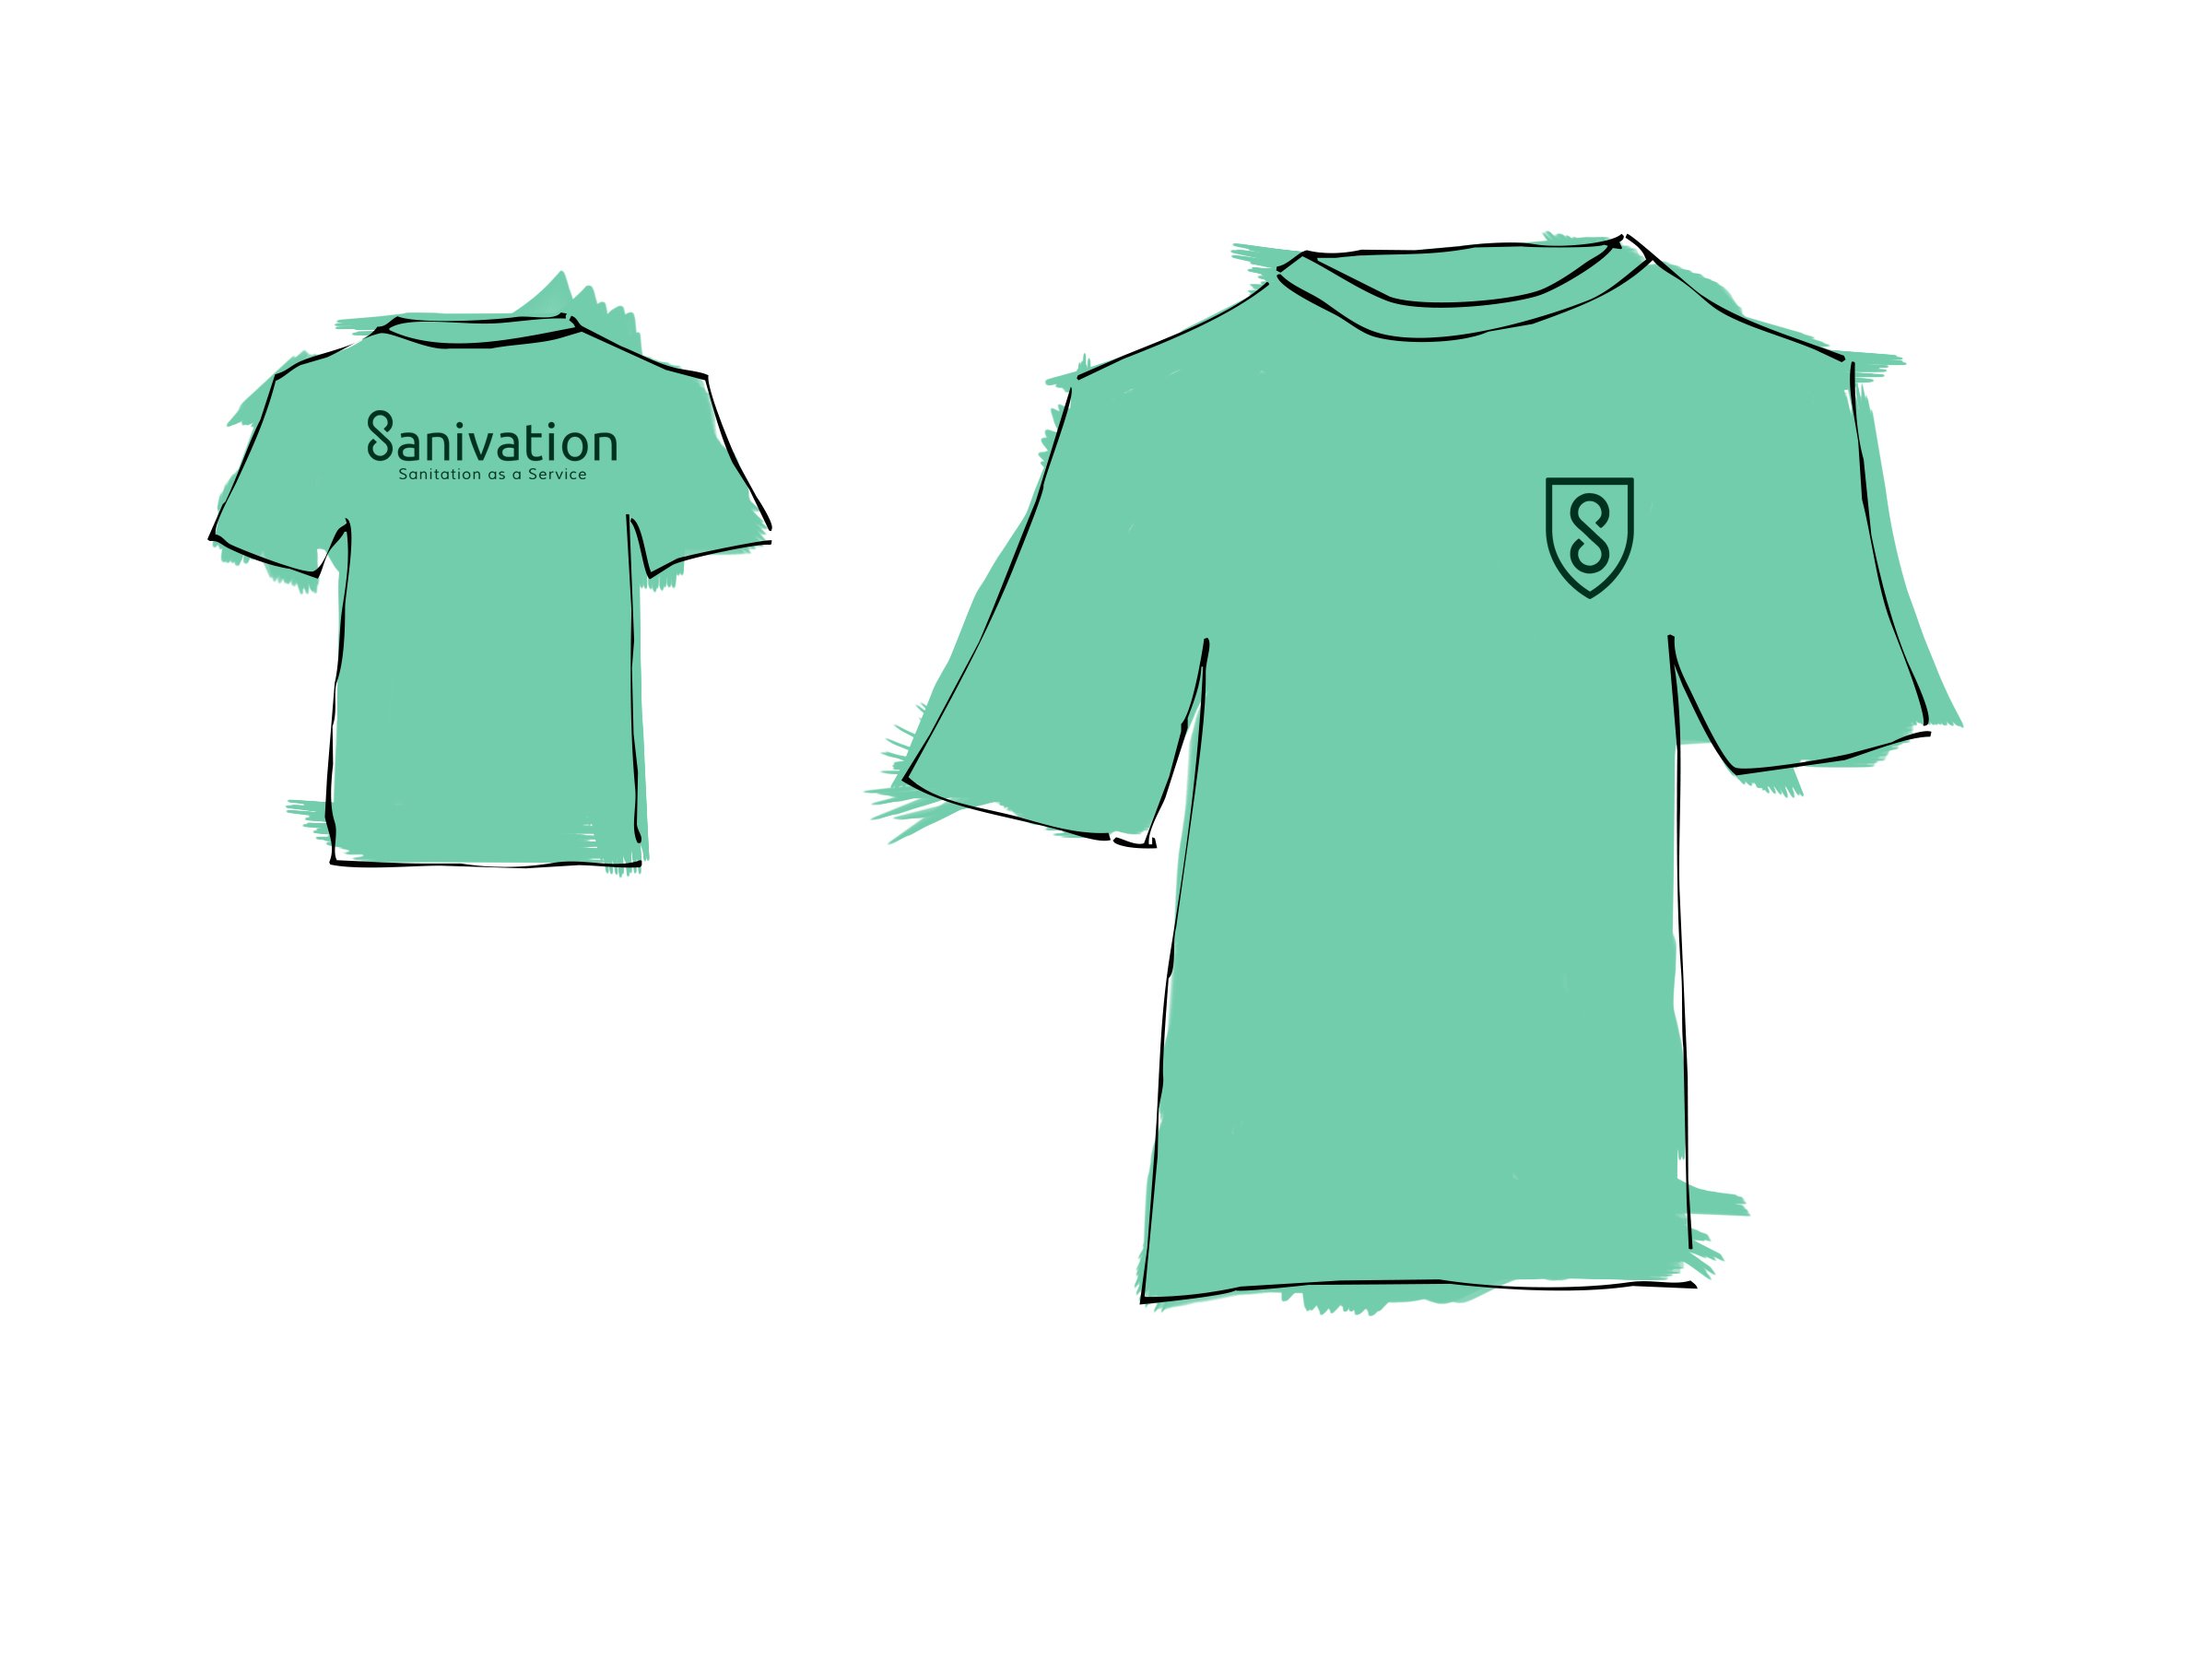 T-Shirt Mockup Draft 1 (Sanivation Green on Mint).jpg